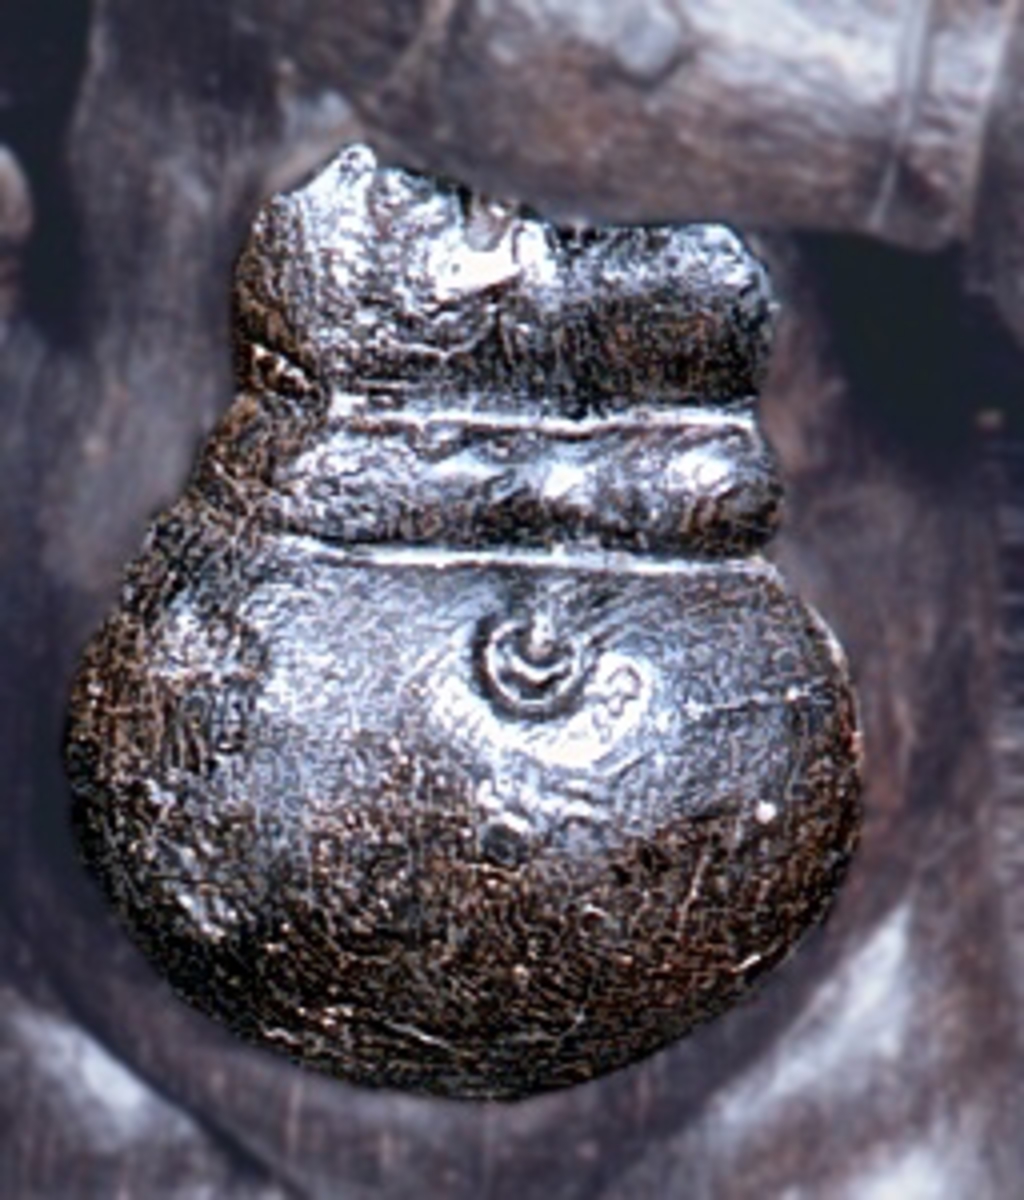 Separat snidad skulpturdel, mage till putto. Urskålad baksida.



Text in English: Belly of a sculpted putto. Separately carved.